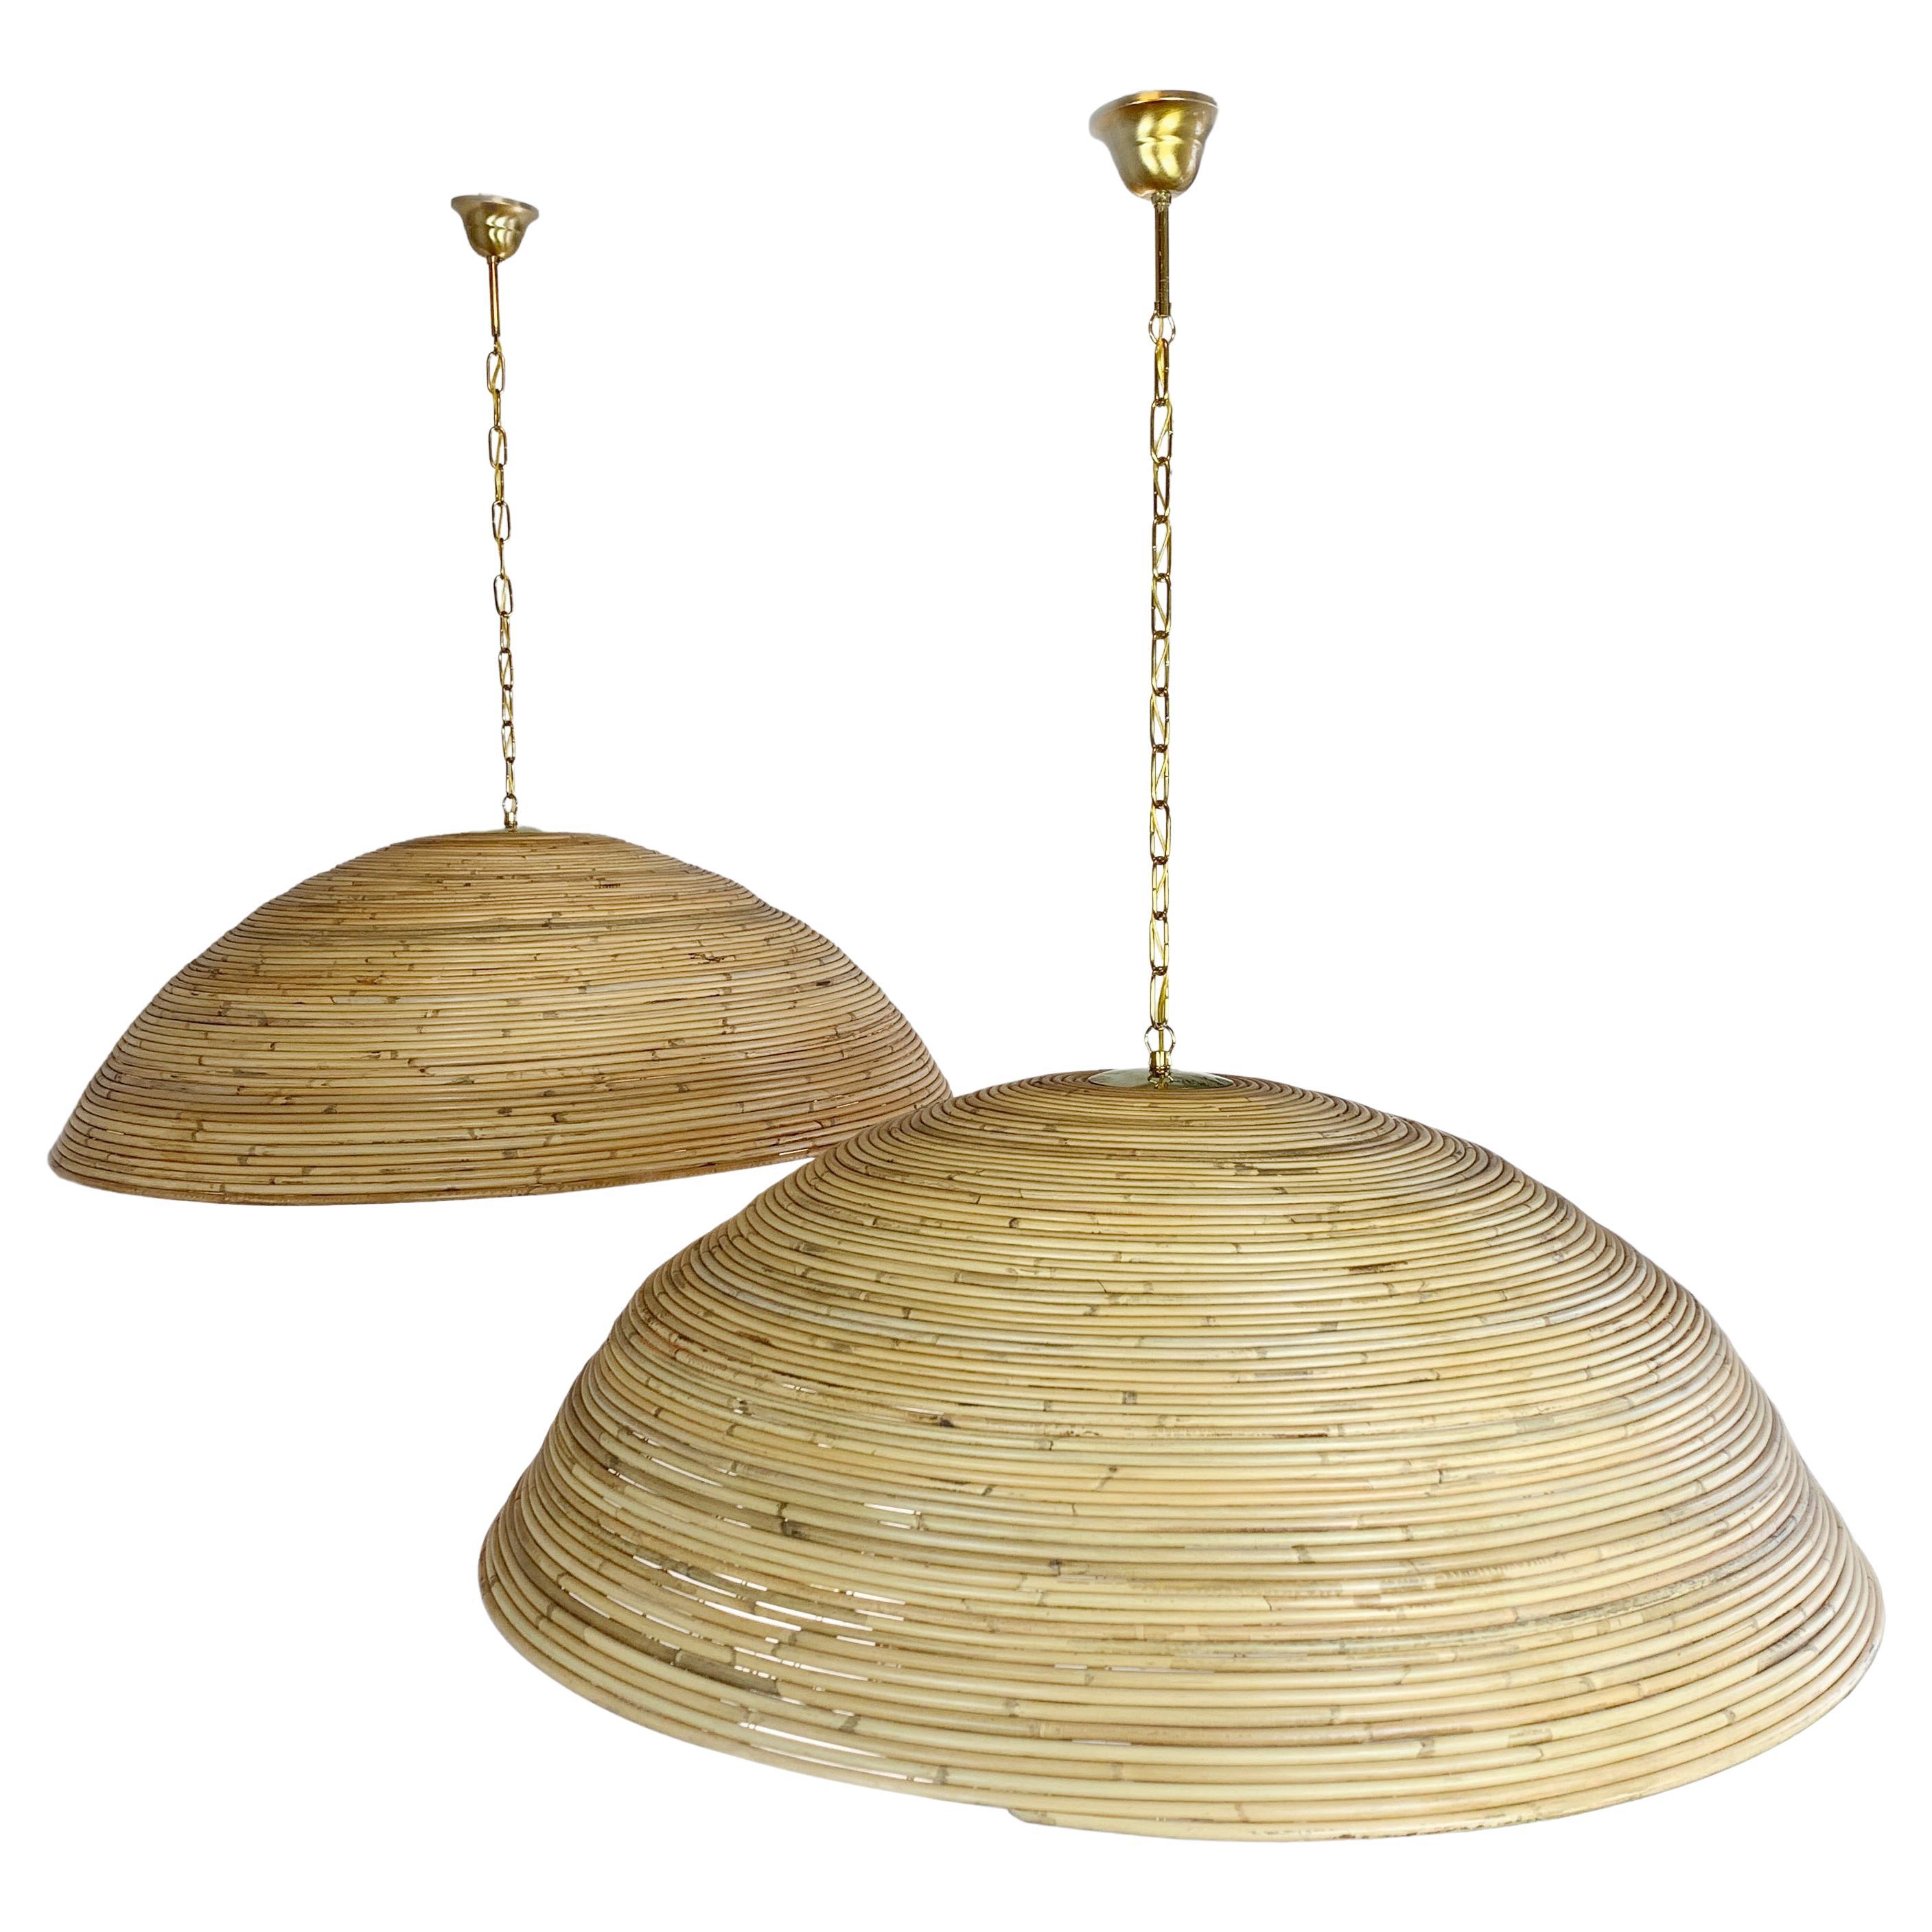 Enormous 1960's Italian Designer Rattan Dome Ceiling Pendants For Sale